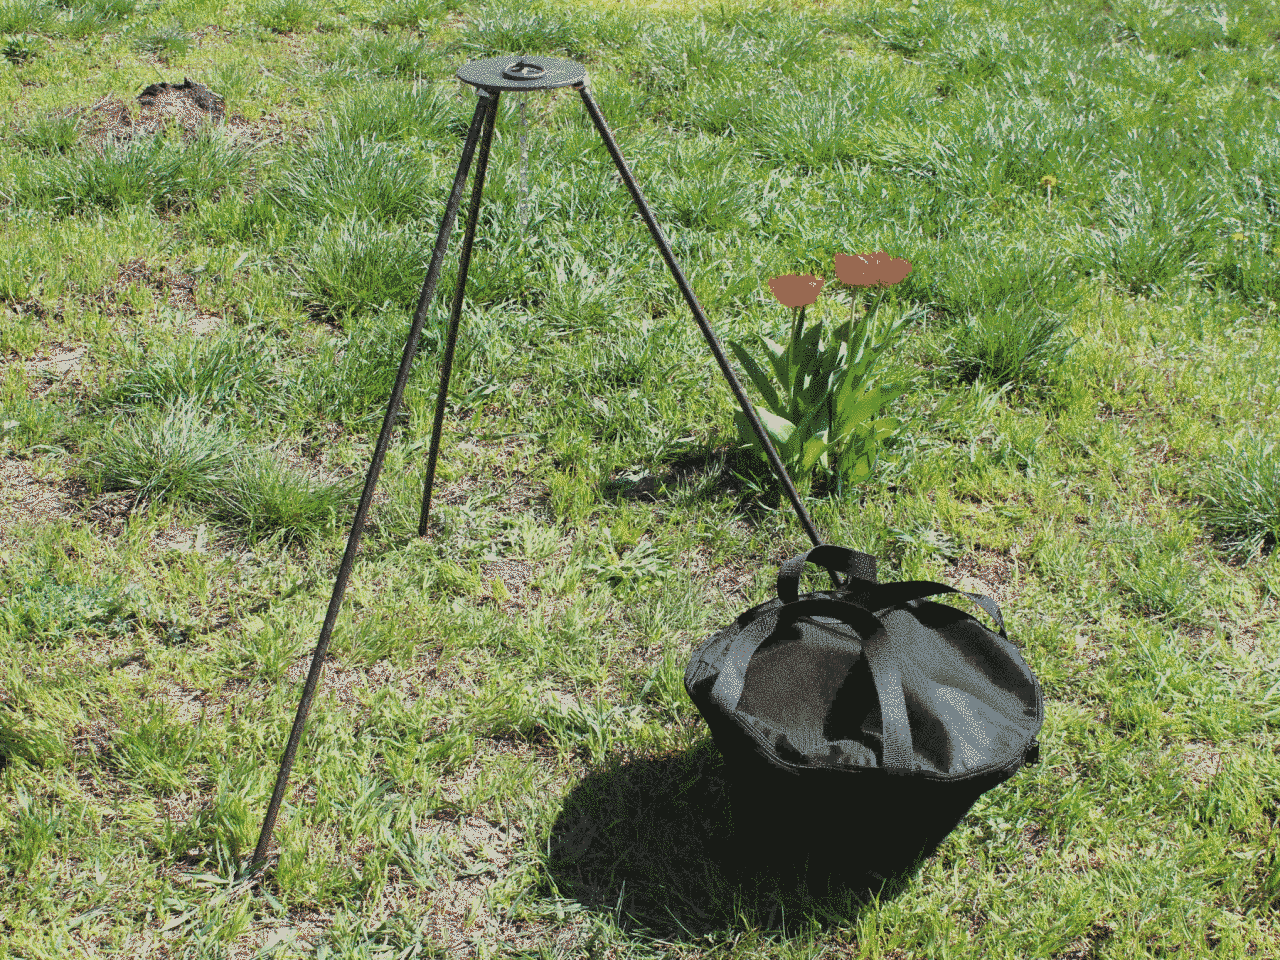 Aluminum cauldron Brizoll 8 l with bracket, lid, a tripod and a bag